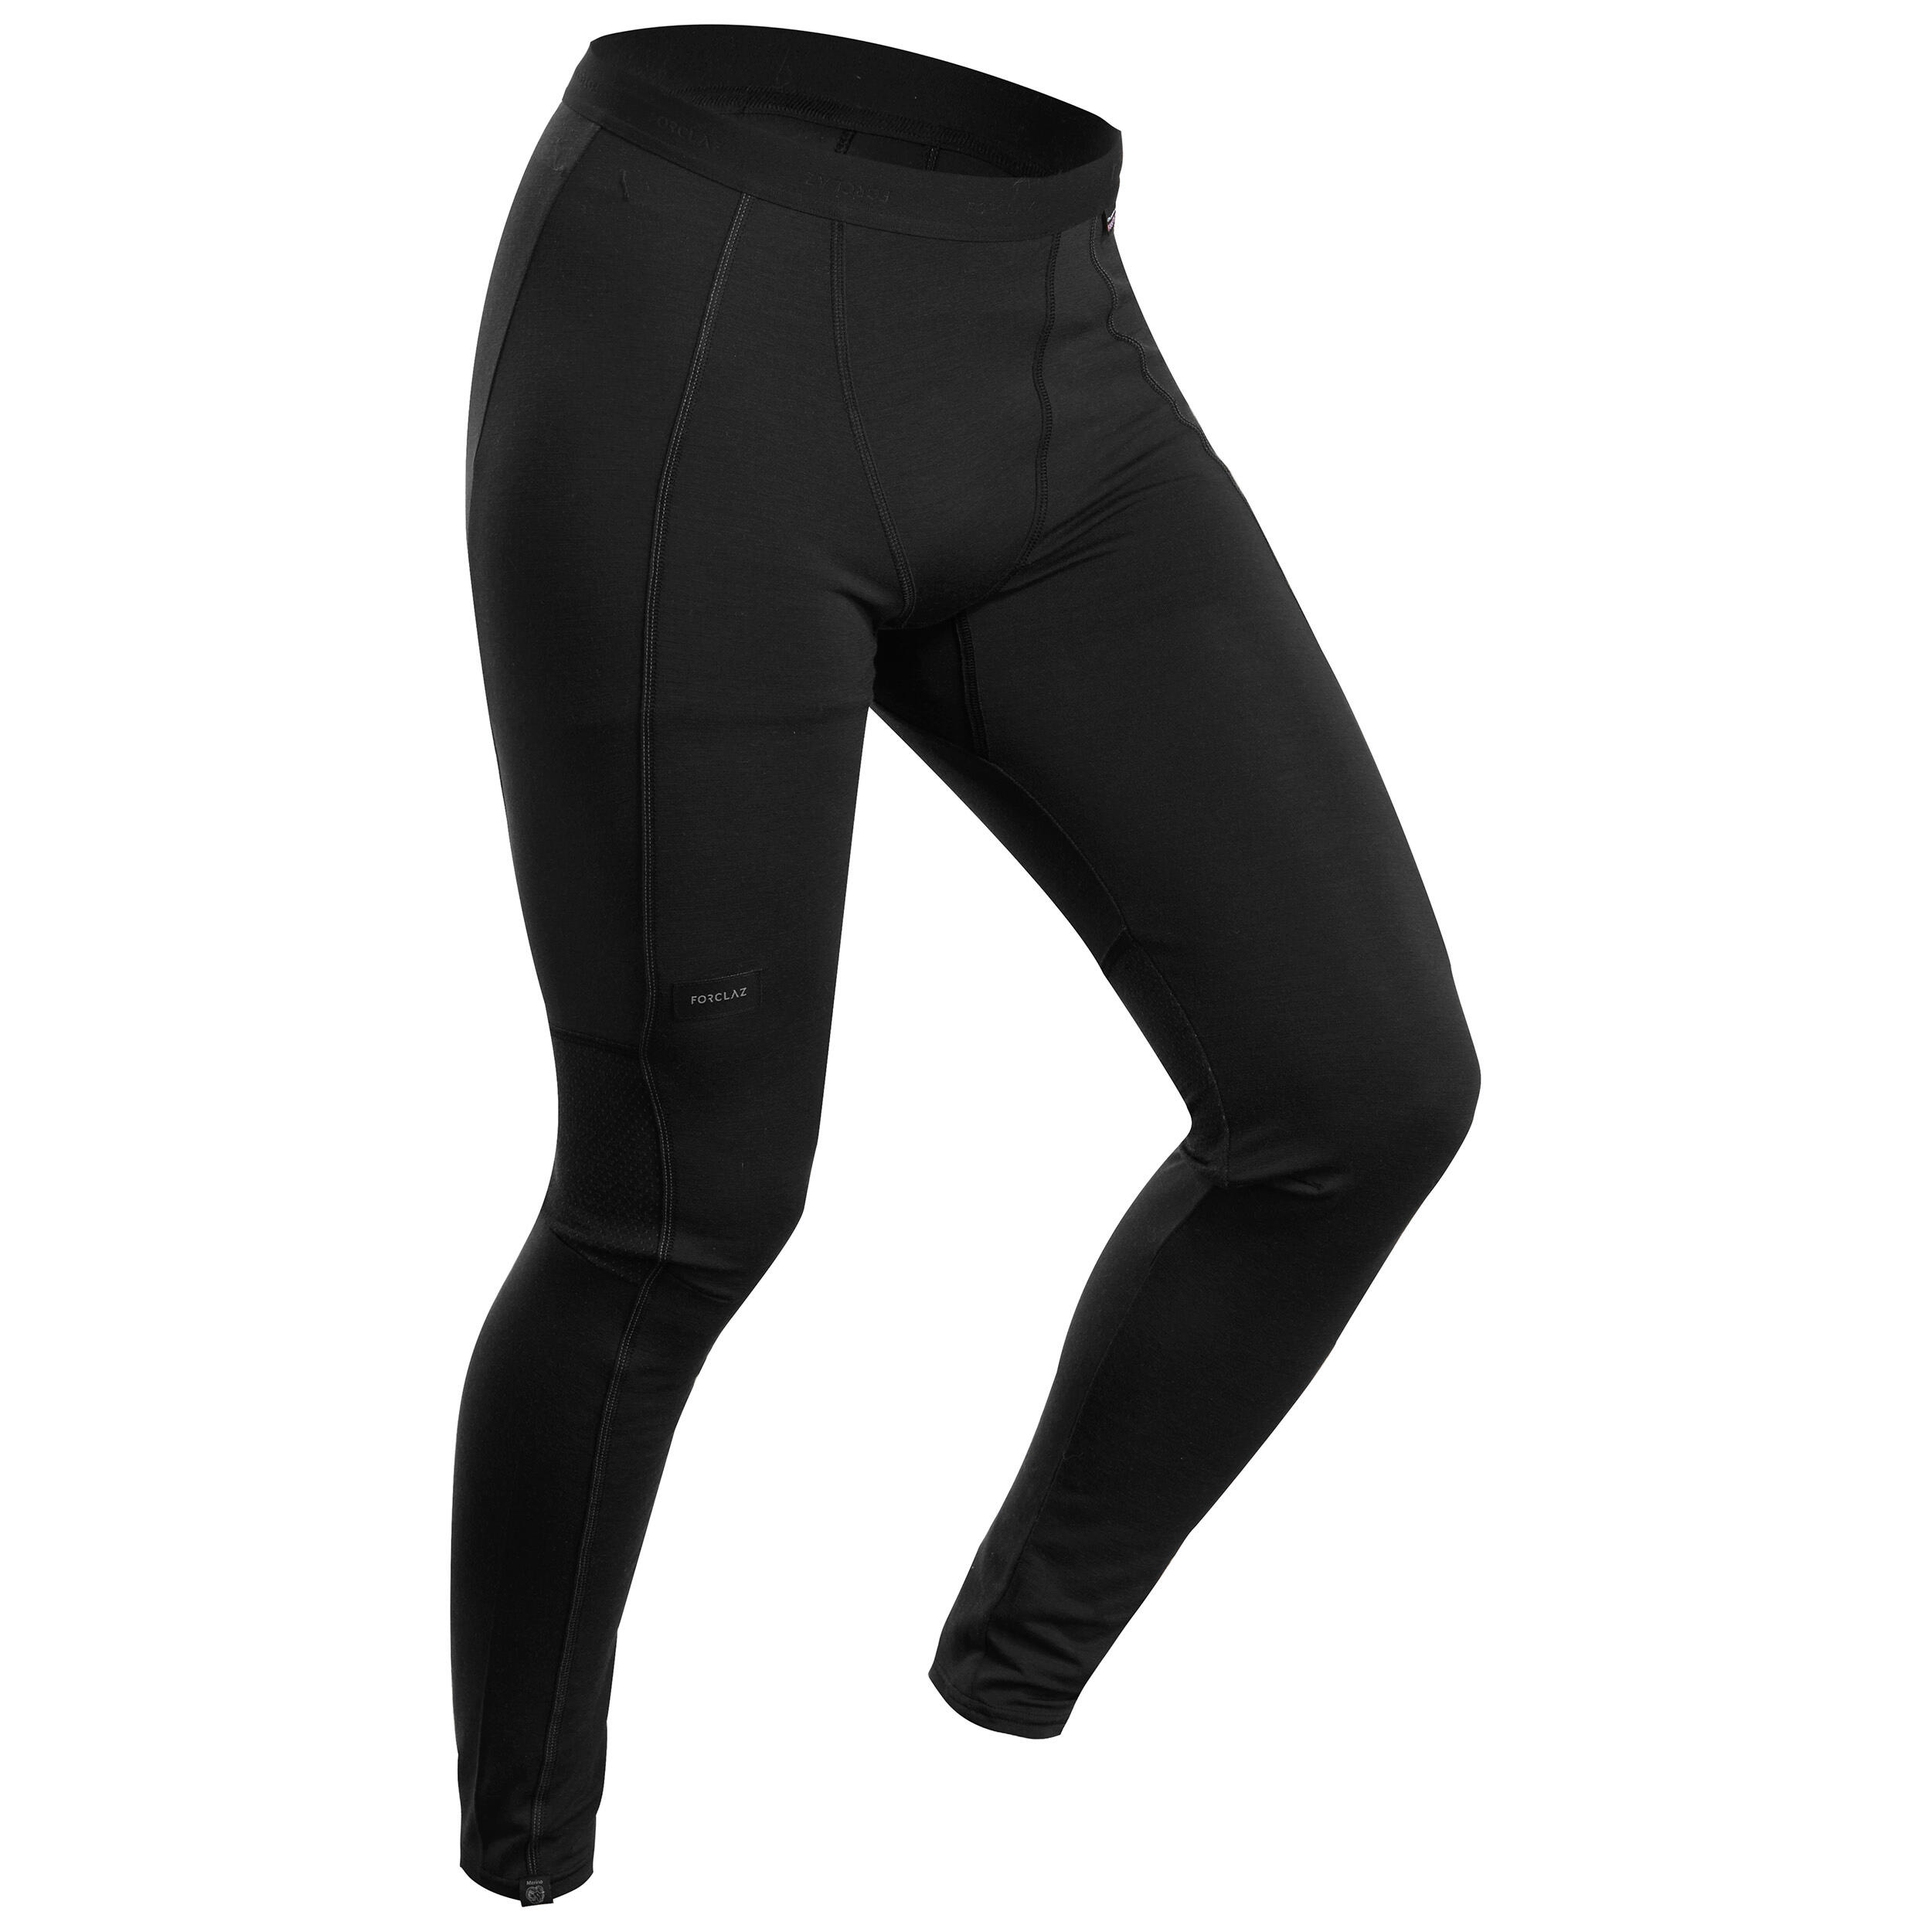 Buy Eizniz Men's 100% Merino Wool Thermal Base Layer Bottom Underwear  Leggings, Black-270g, Medium at